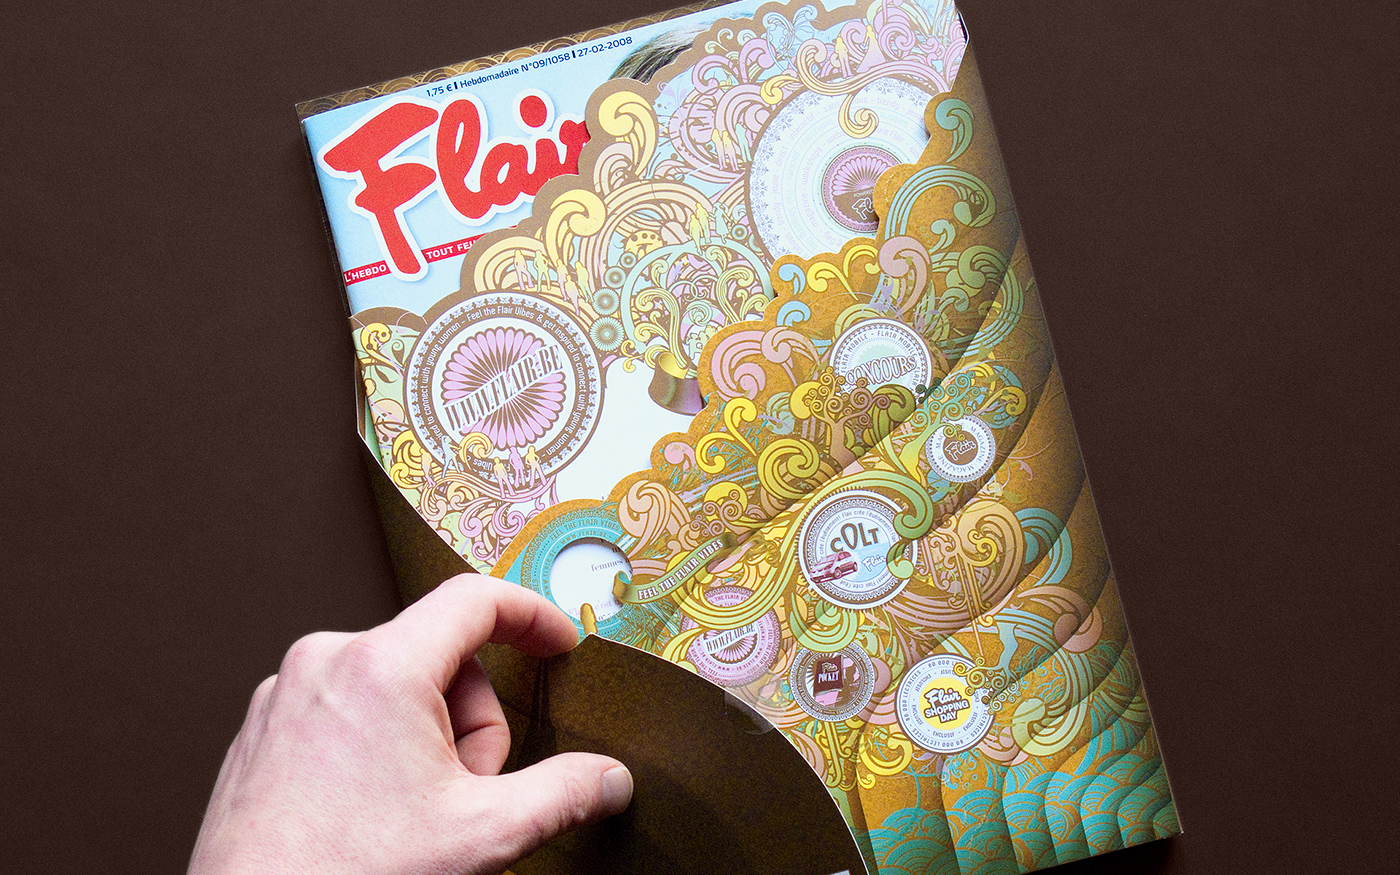 Flair magazine mailing b2b presentation folder